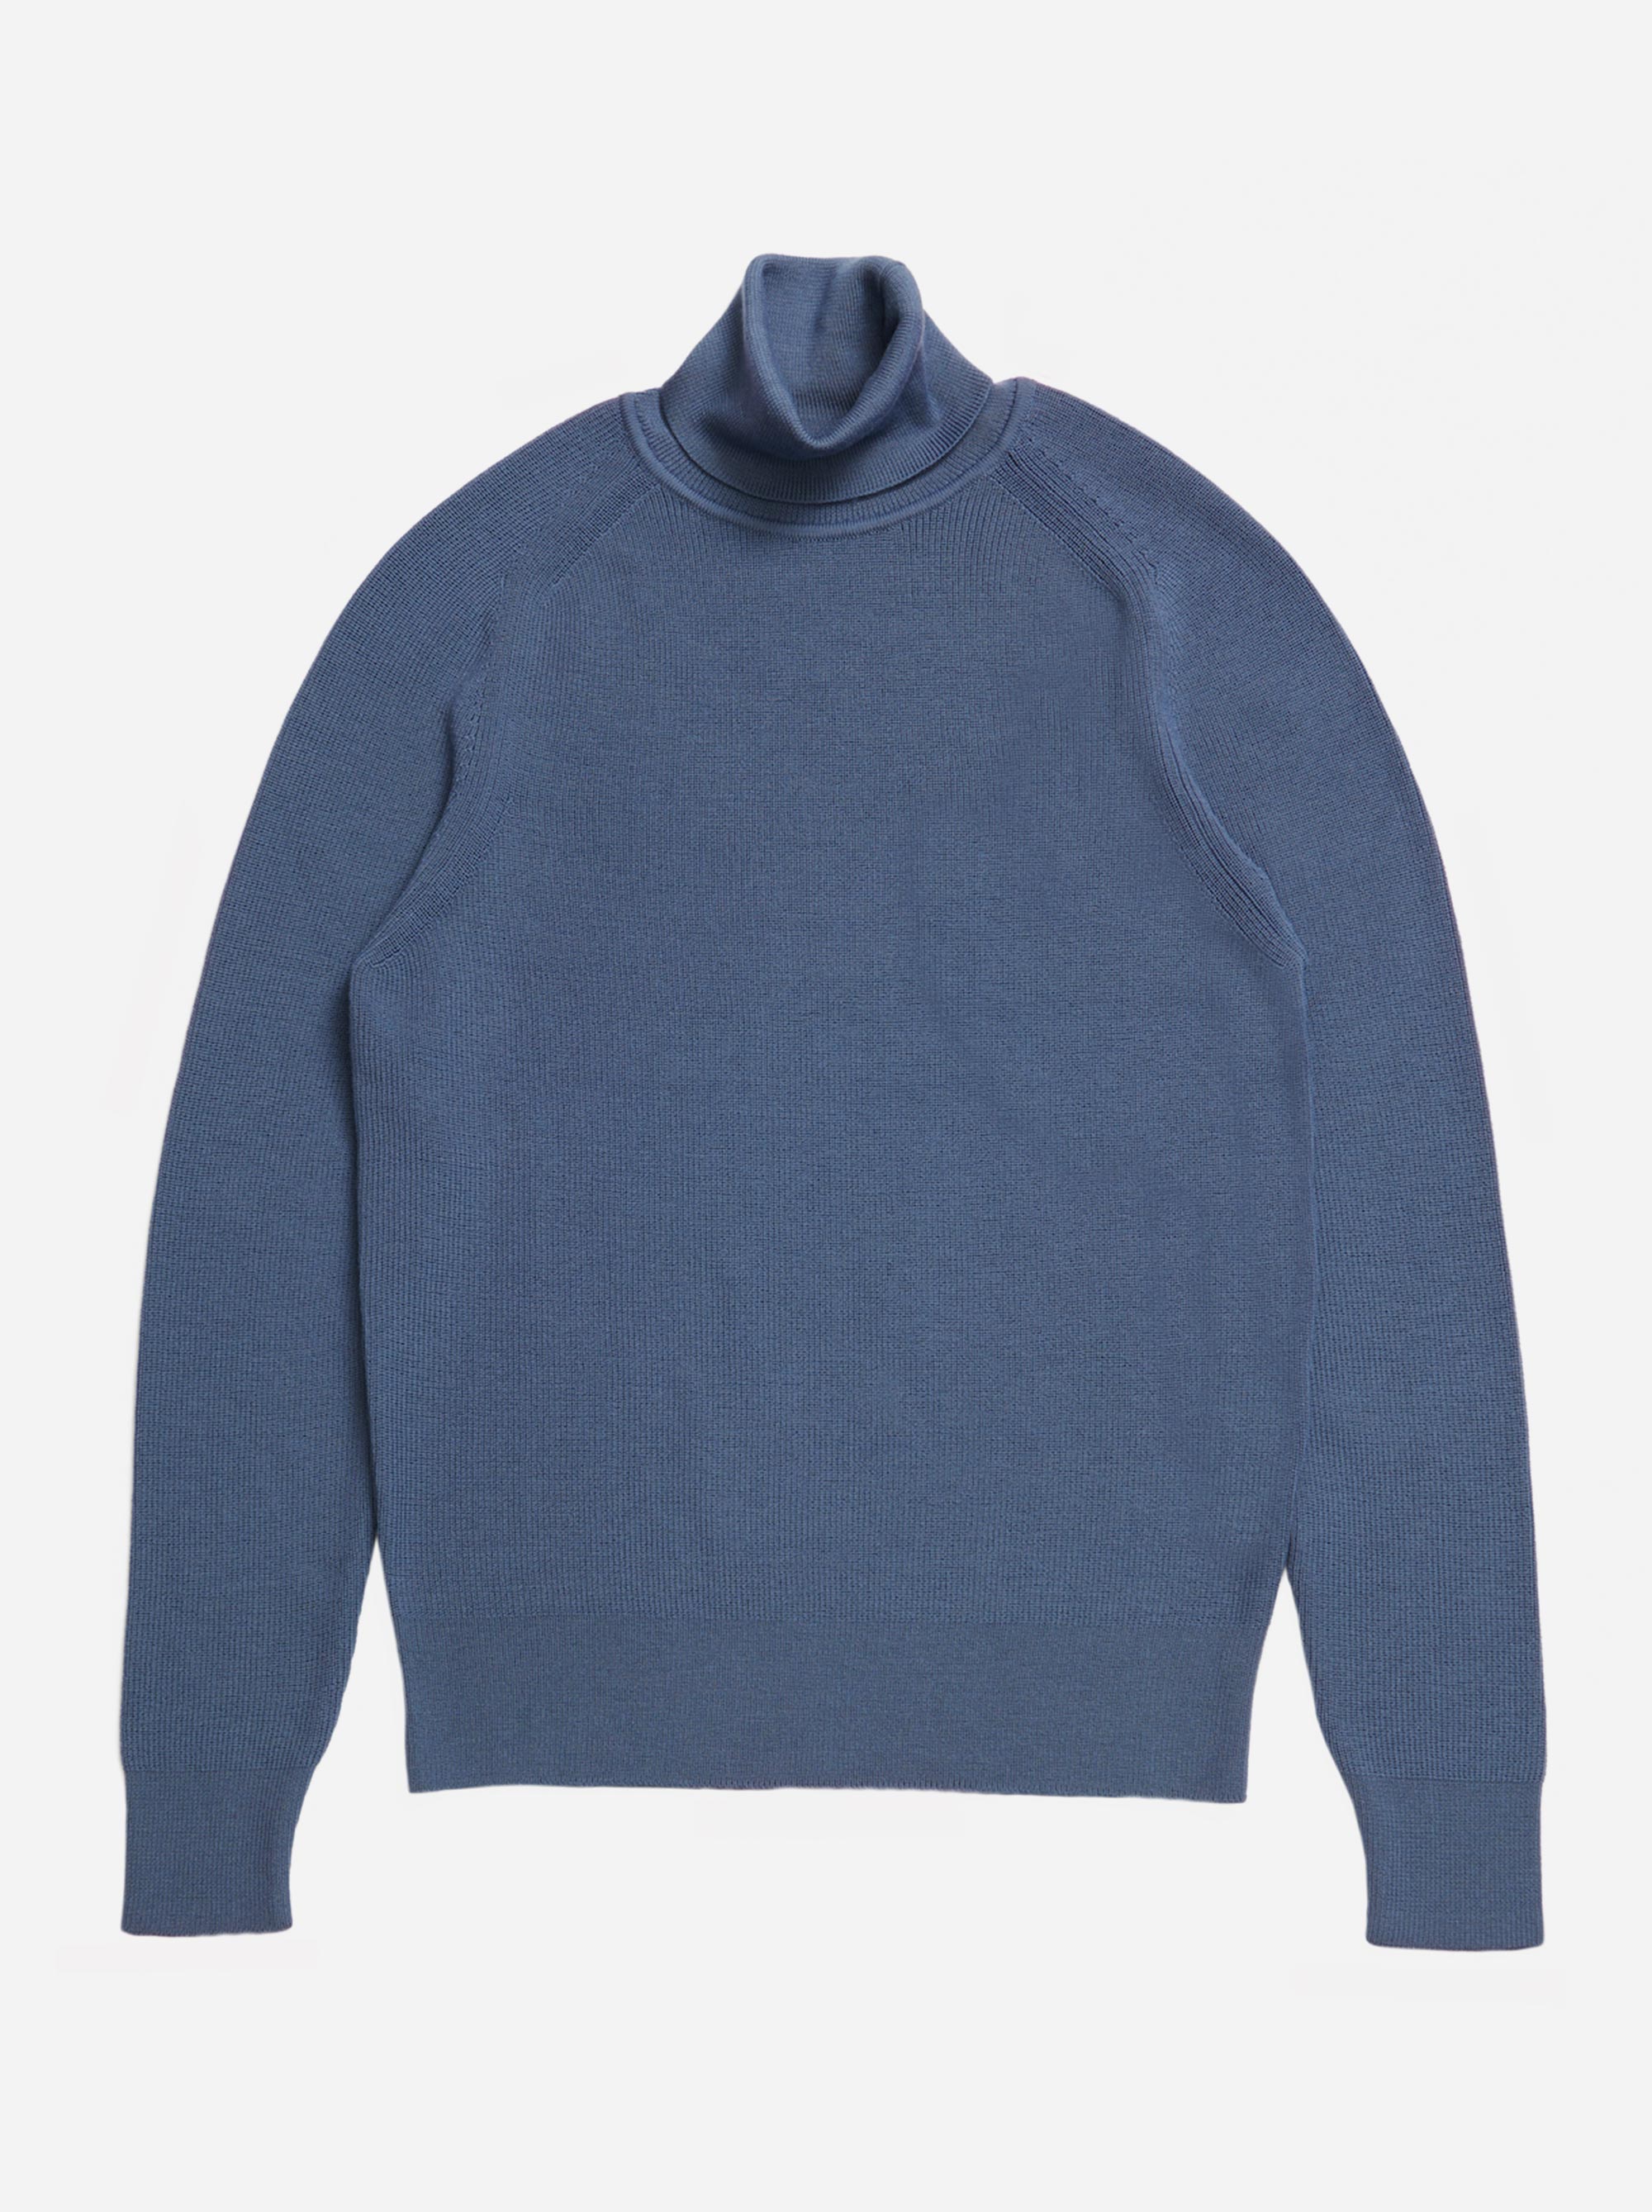 Teym - Turtleneck - The Merino Sweater - Men - Sky blue - 4